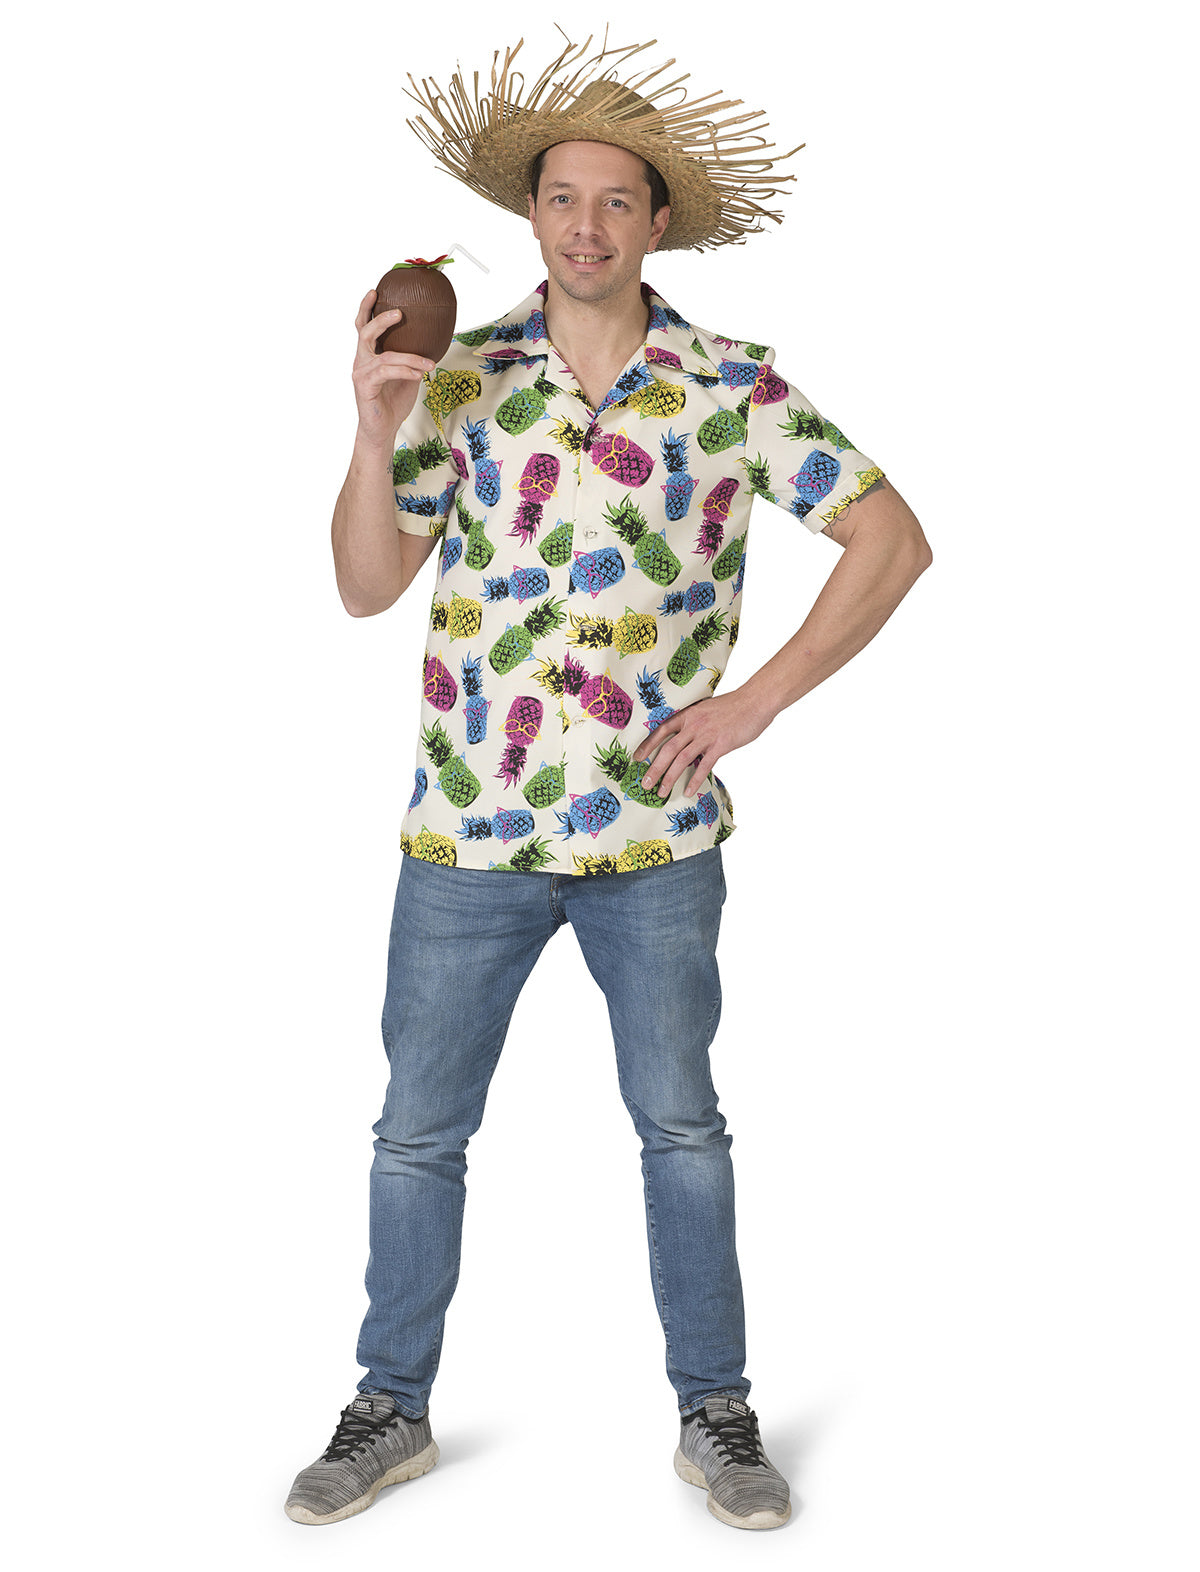 Funny Fashion - Natuur Groente & Fruit Kostuum - Tropisch Samba Costa Rica Ananas Shirt Man - wit / beige,multicolor - Maat 56-58 - Carnavalskleding - Verkleedkleding